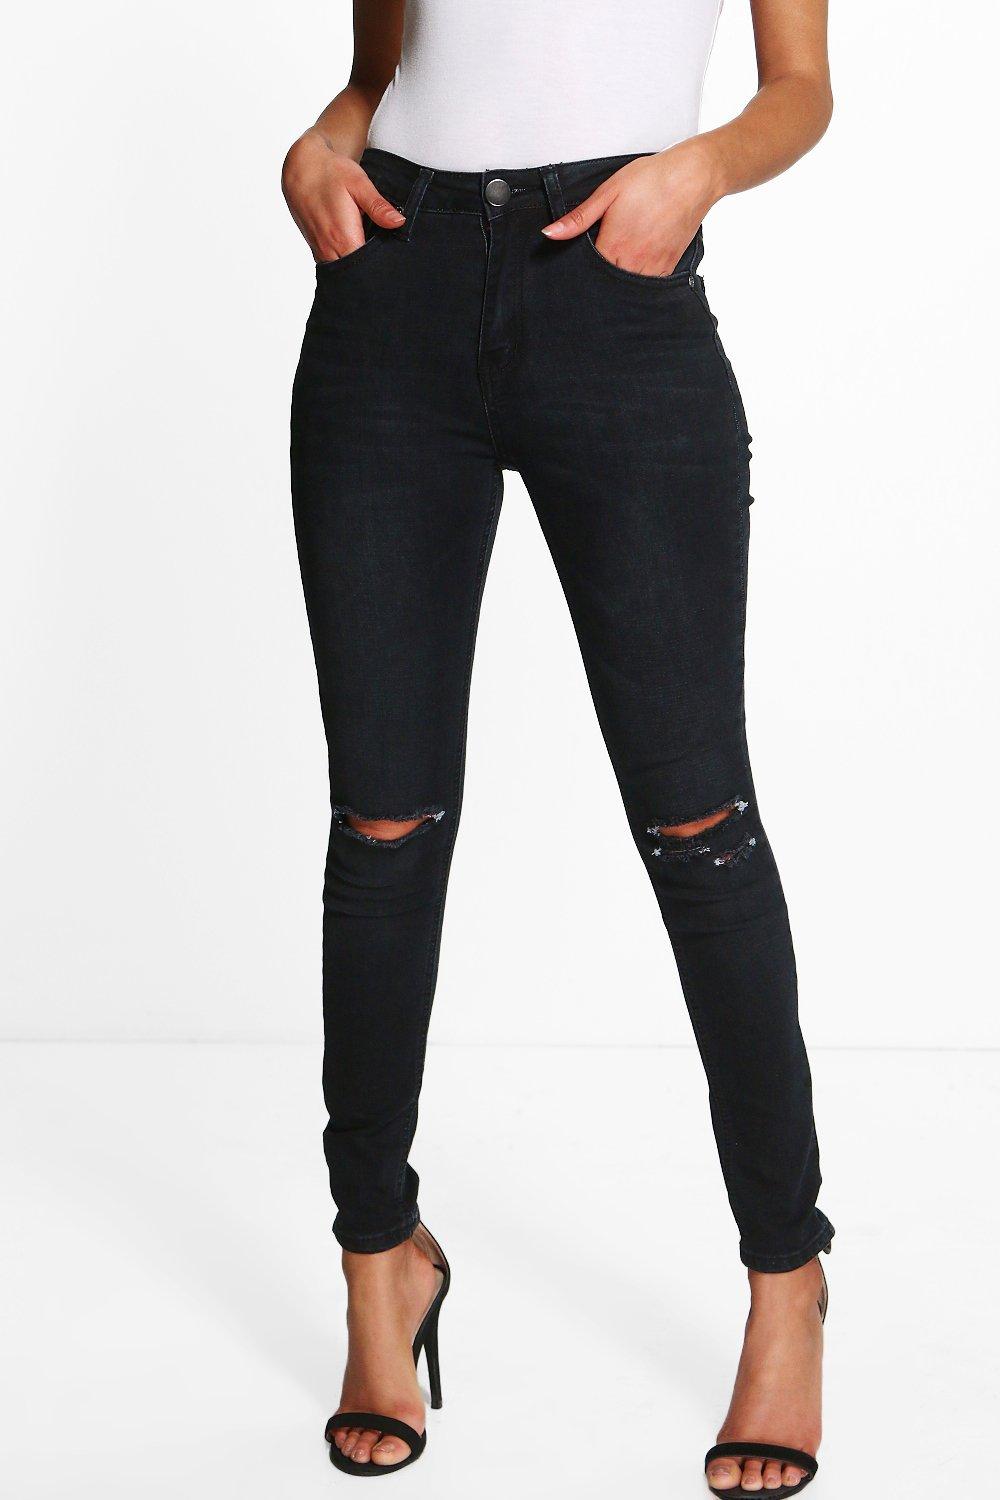 petite black high waisted skinny jeans